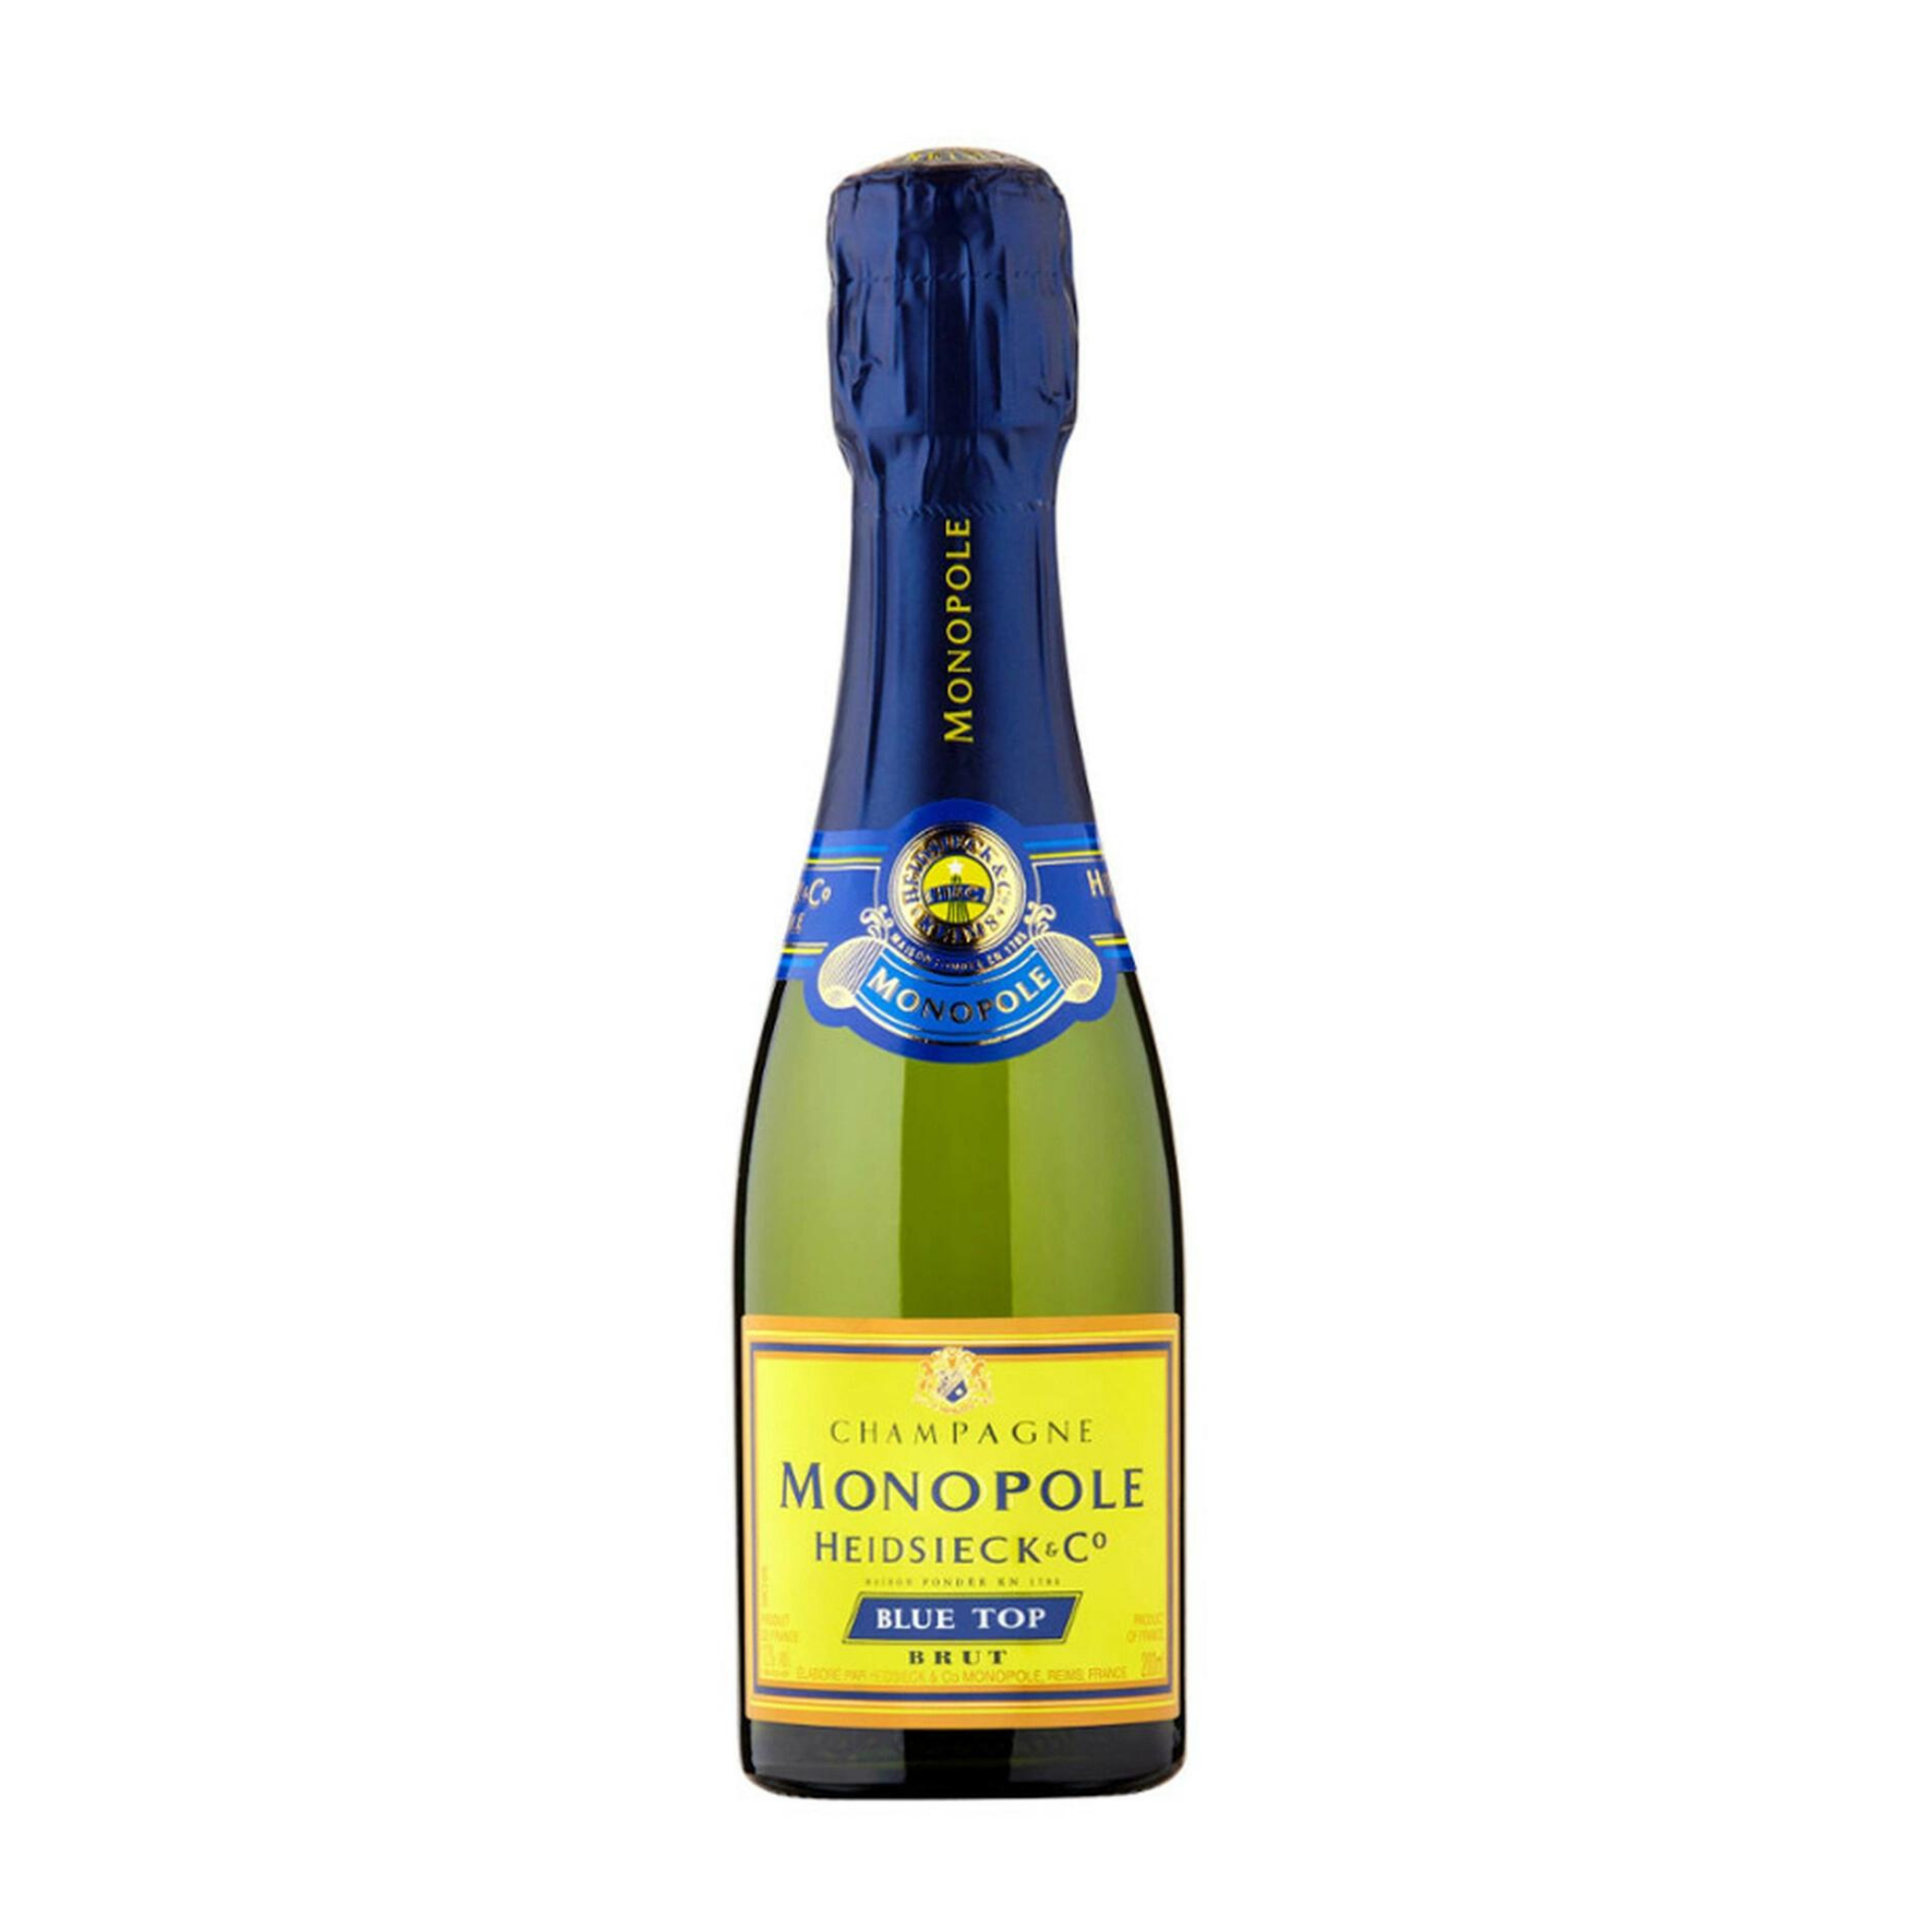 Grand Brut Wine Cellar & Heidsieck Top Monopole Blue Mini – Champagne Co.